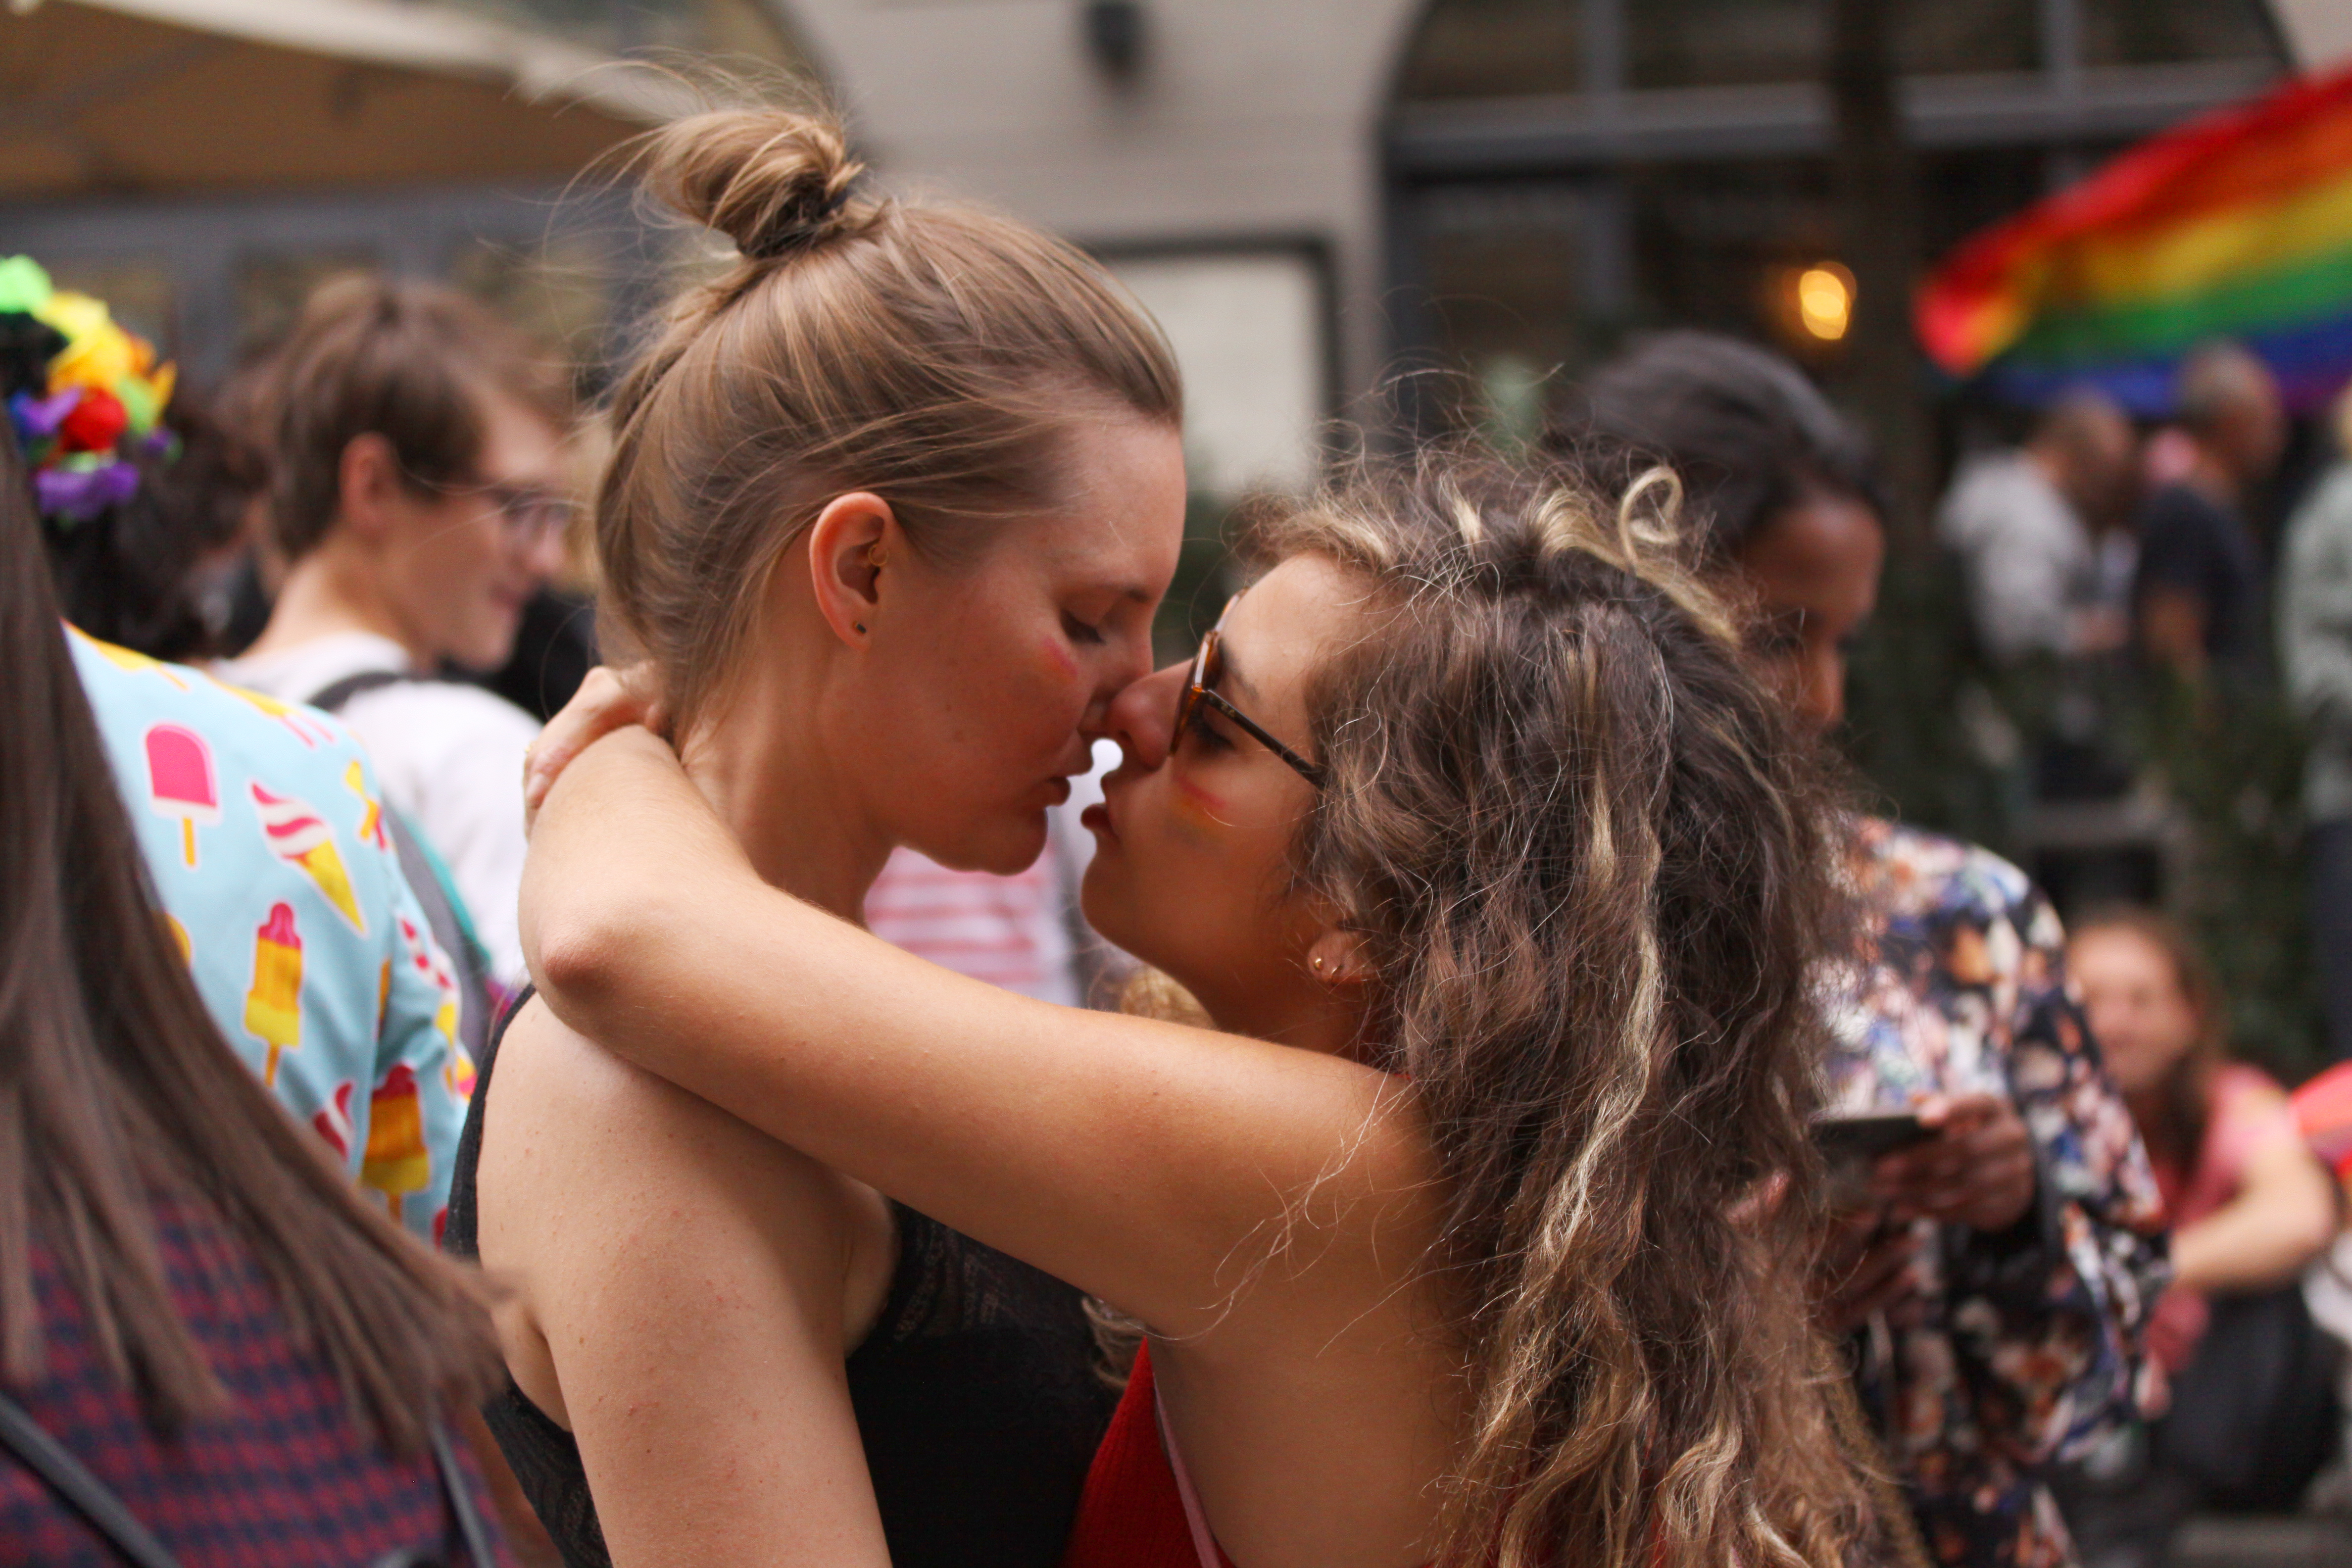 Hook in Singapore up app lesbian Lesbian hookup